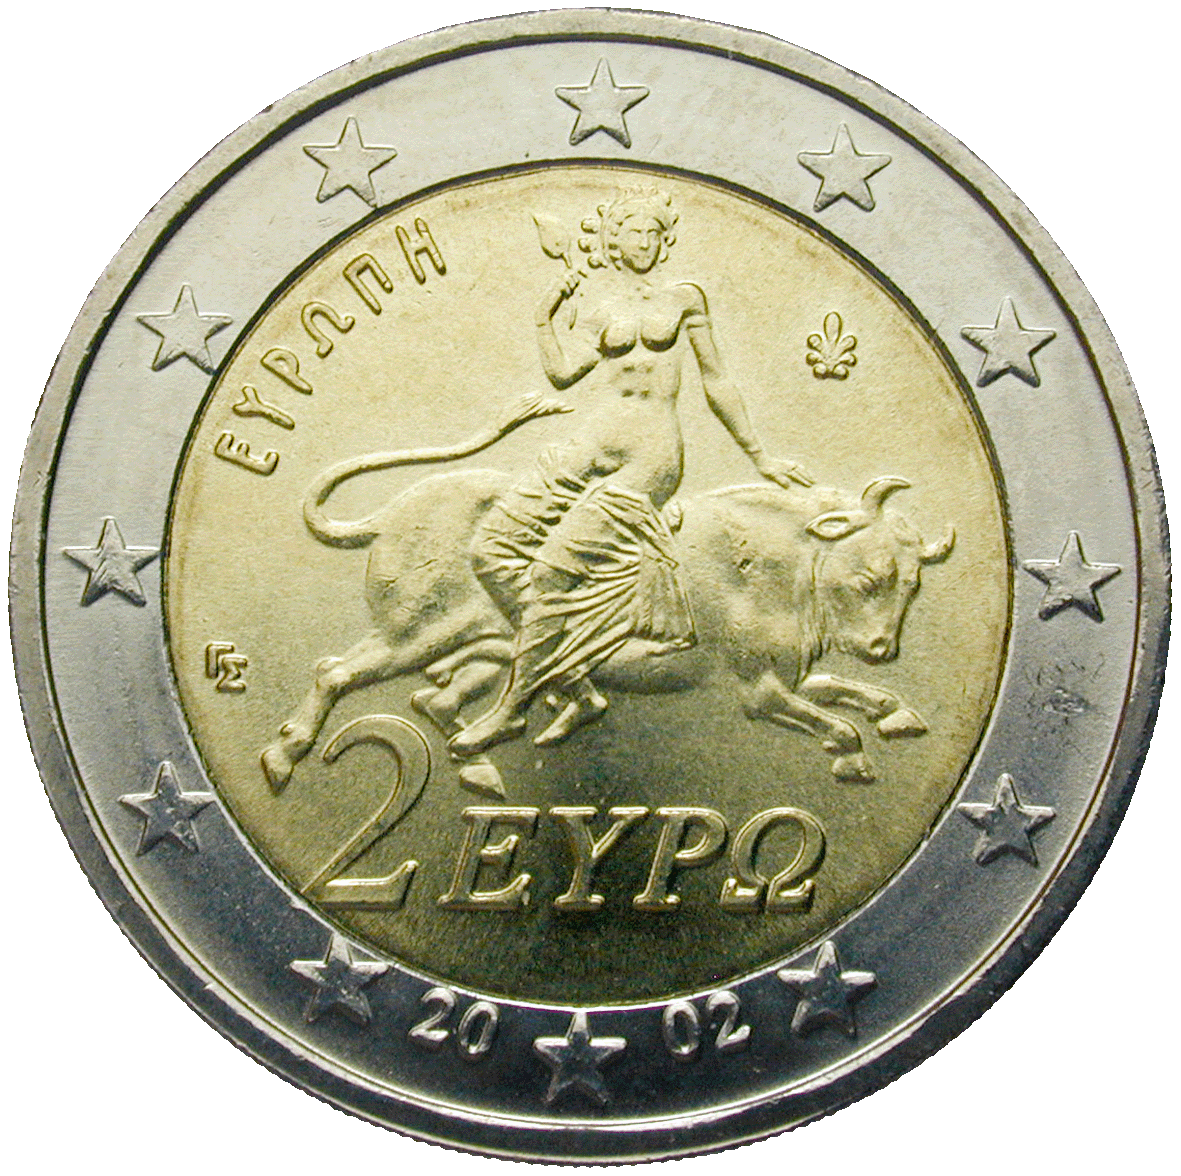 Republic of Greece, 2 Euro 2002 (obverse)